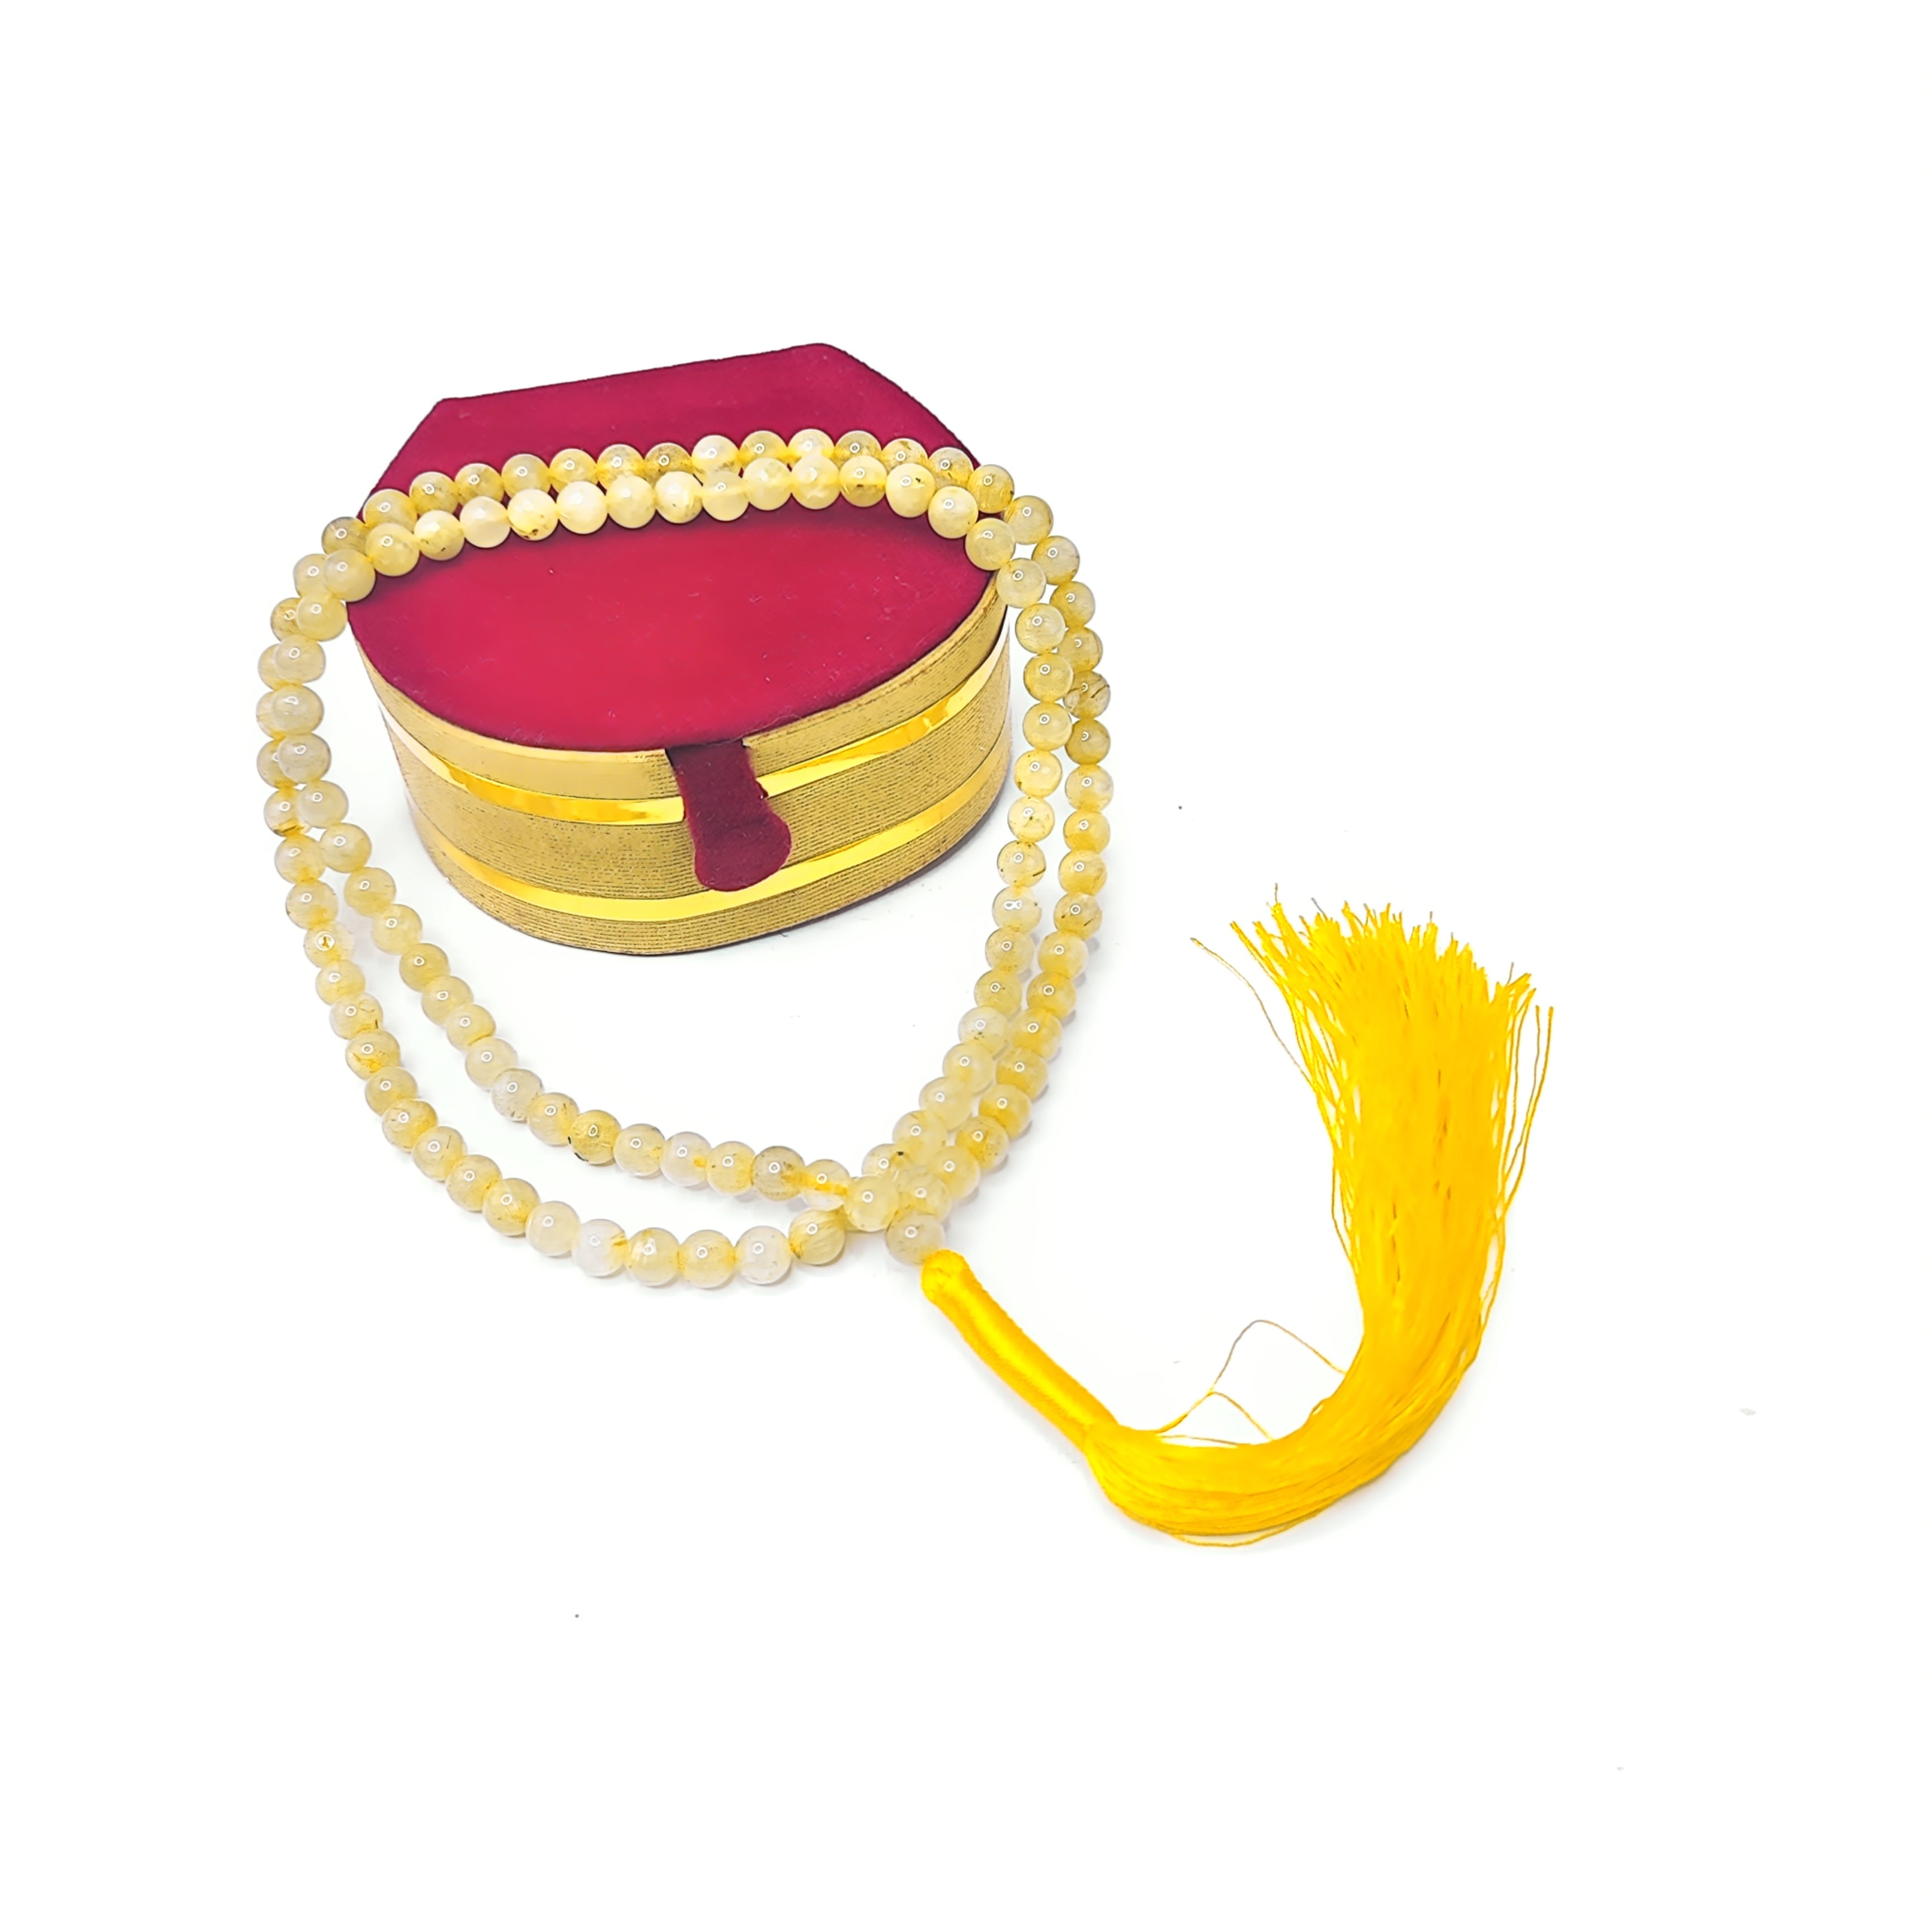 Golden Rutile Round Plain Beads Japamala 6mm